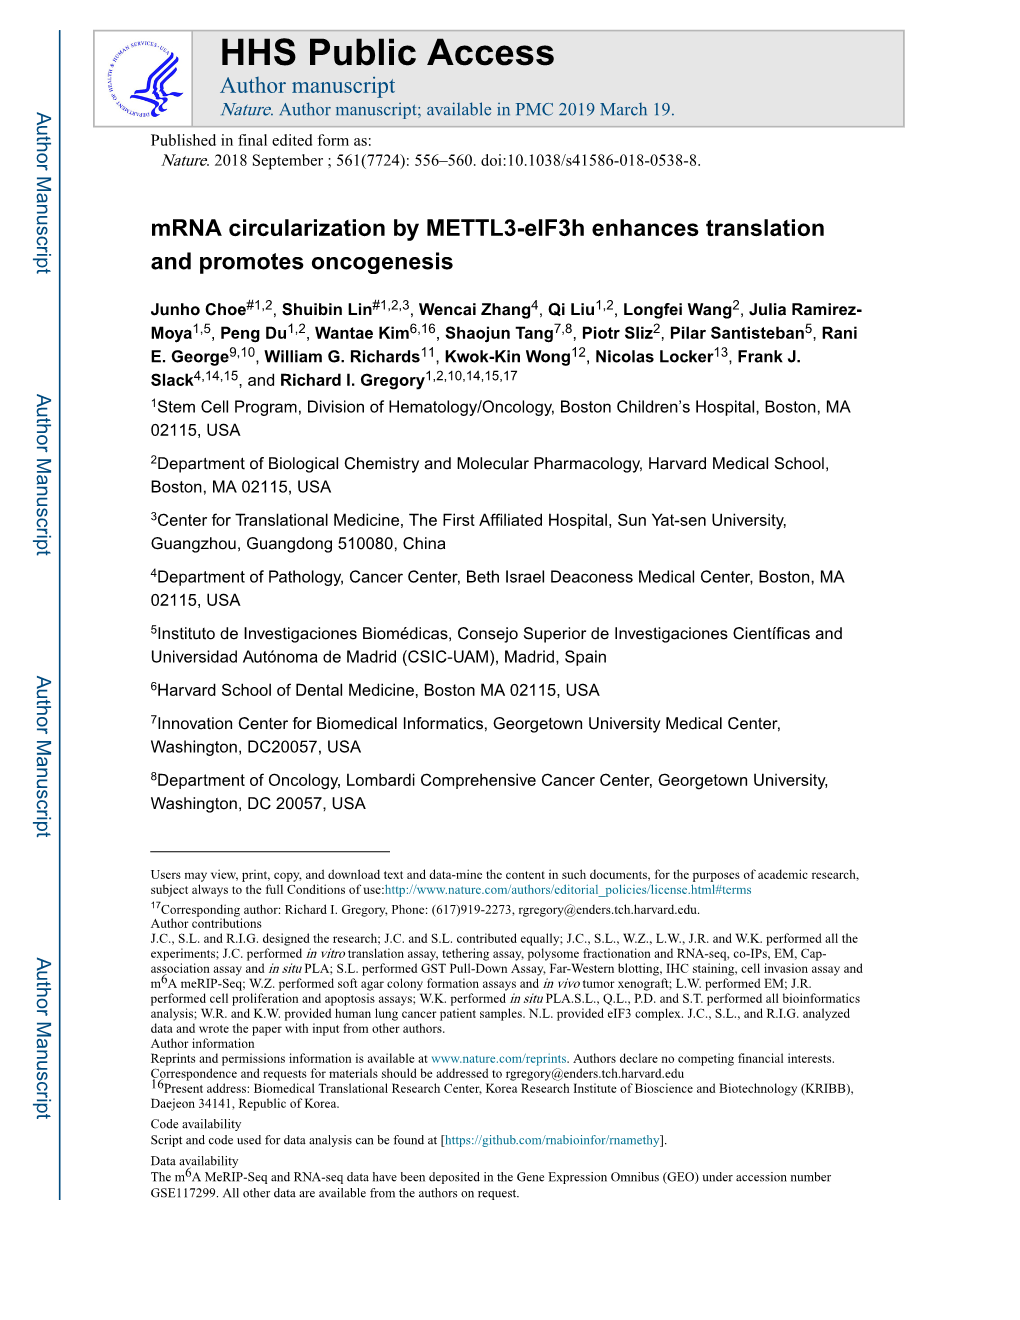 Mrna Circularization by METTL3-Eif3h Enhances Translation and Promotes Oncogenesis